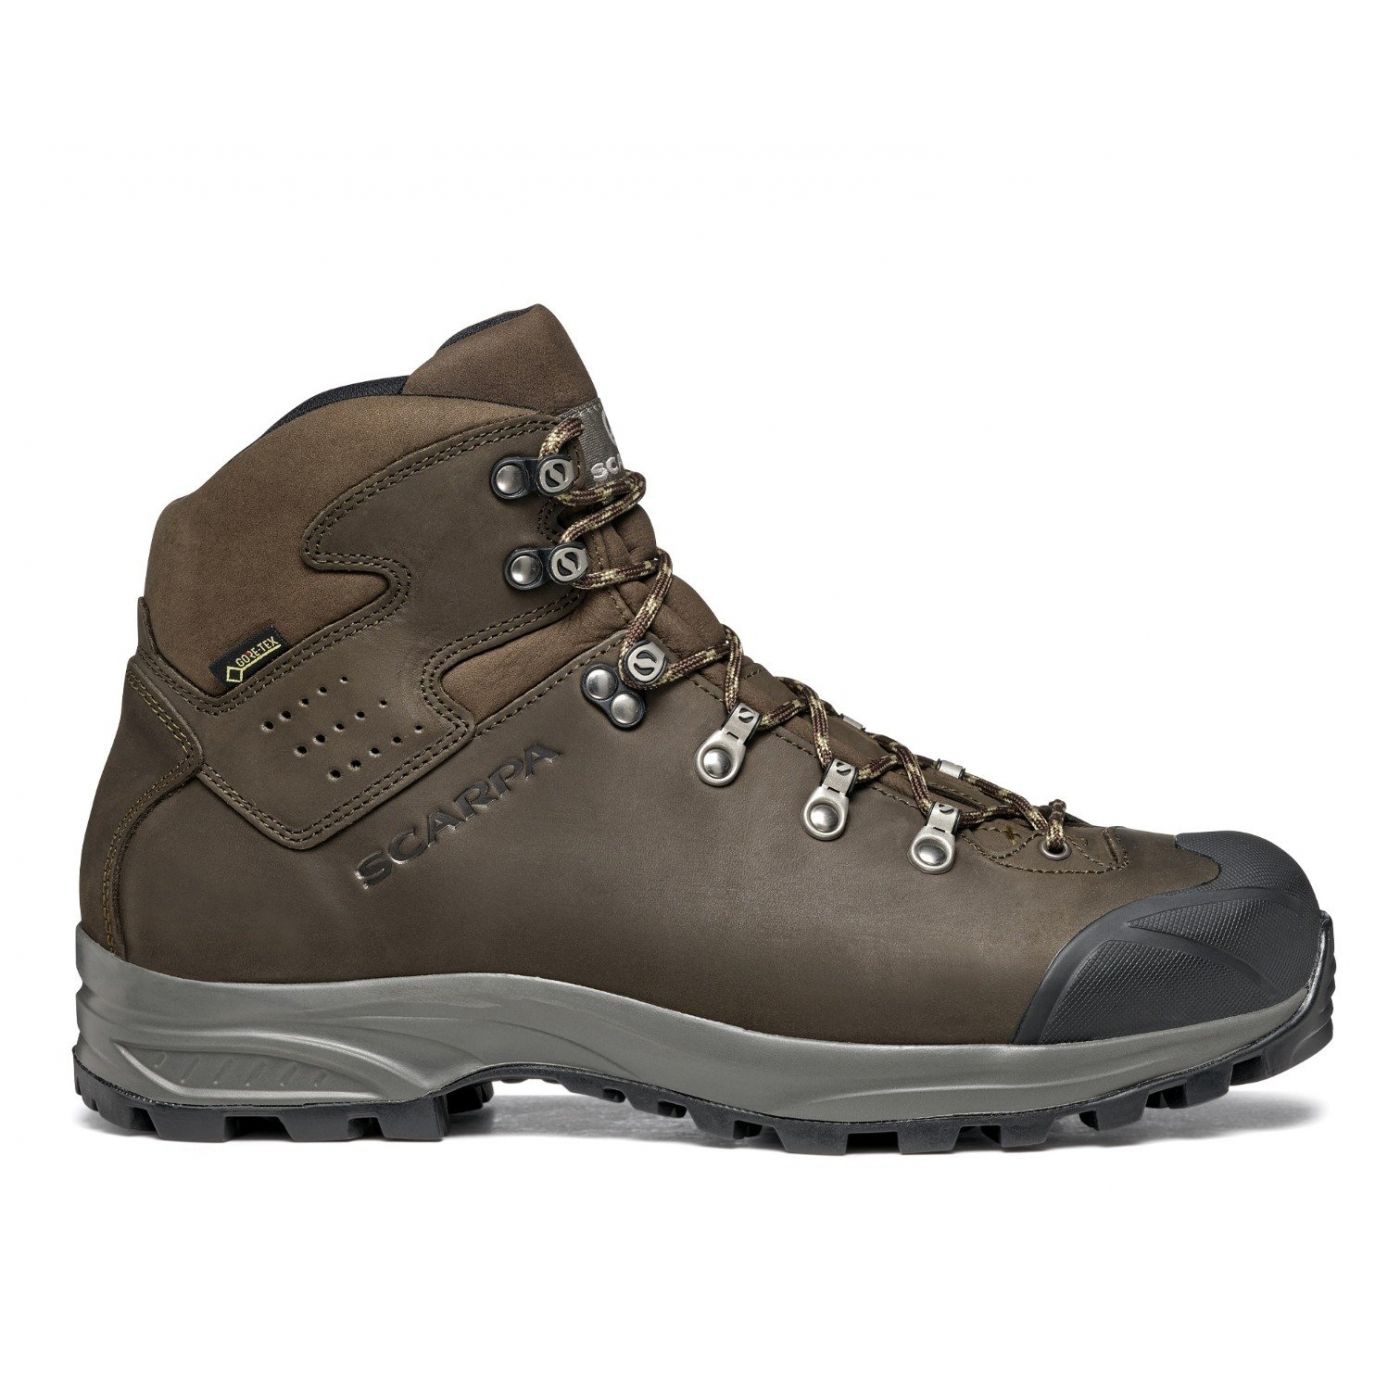 Men's Kailash Plus Gore-Tex Hiking Boots